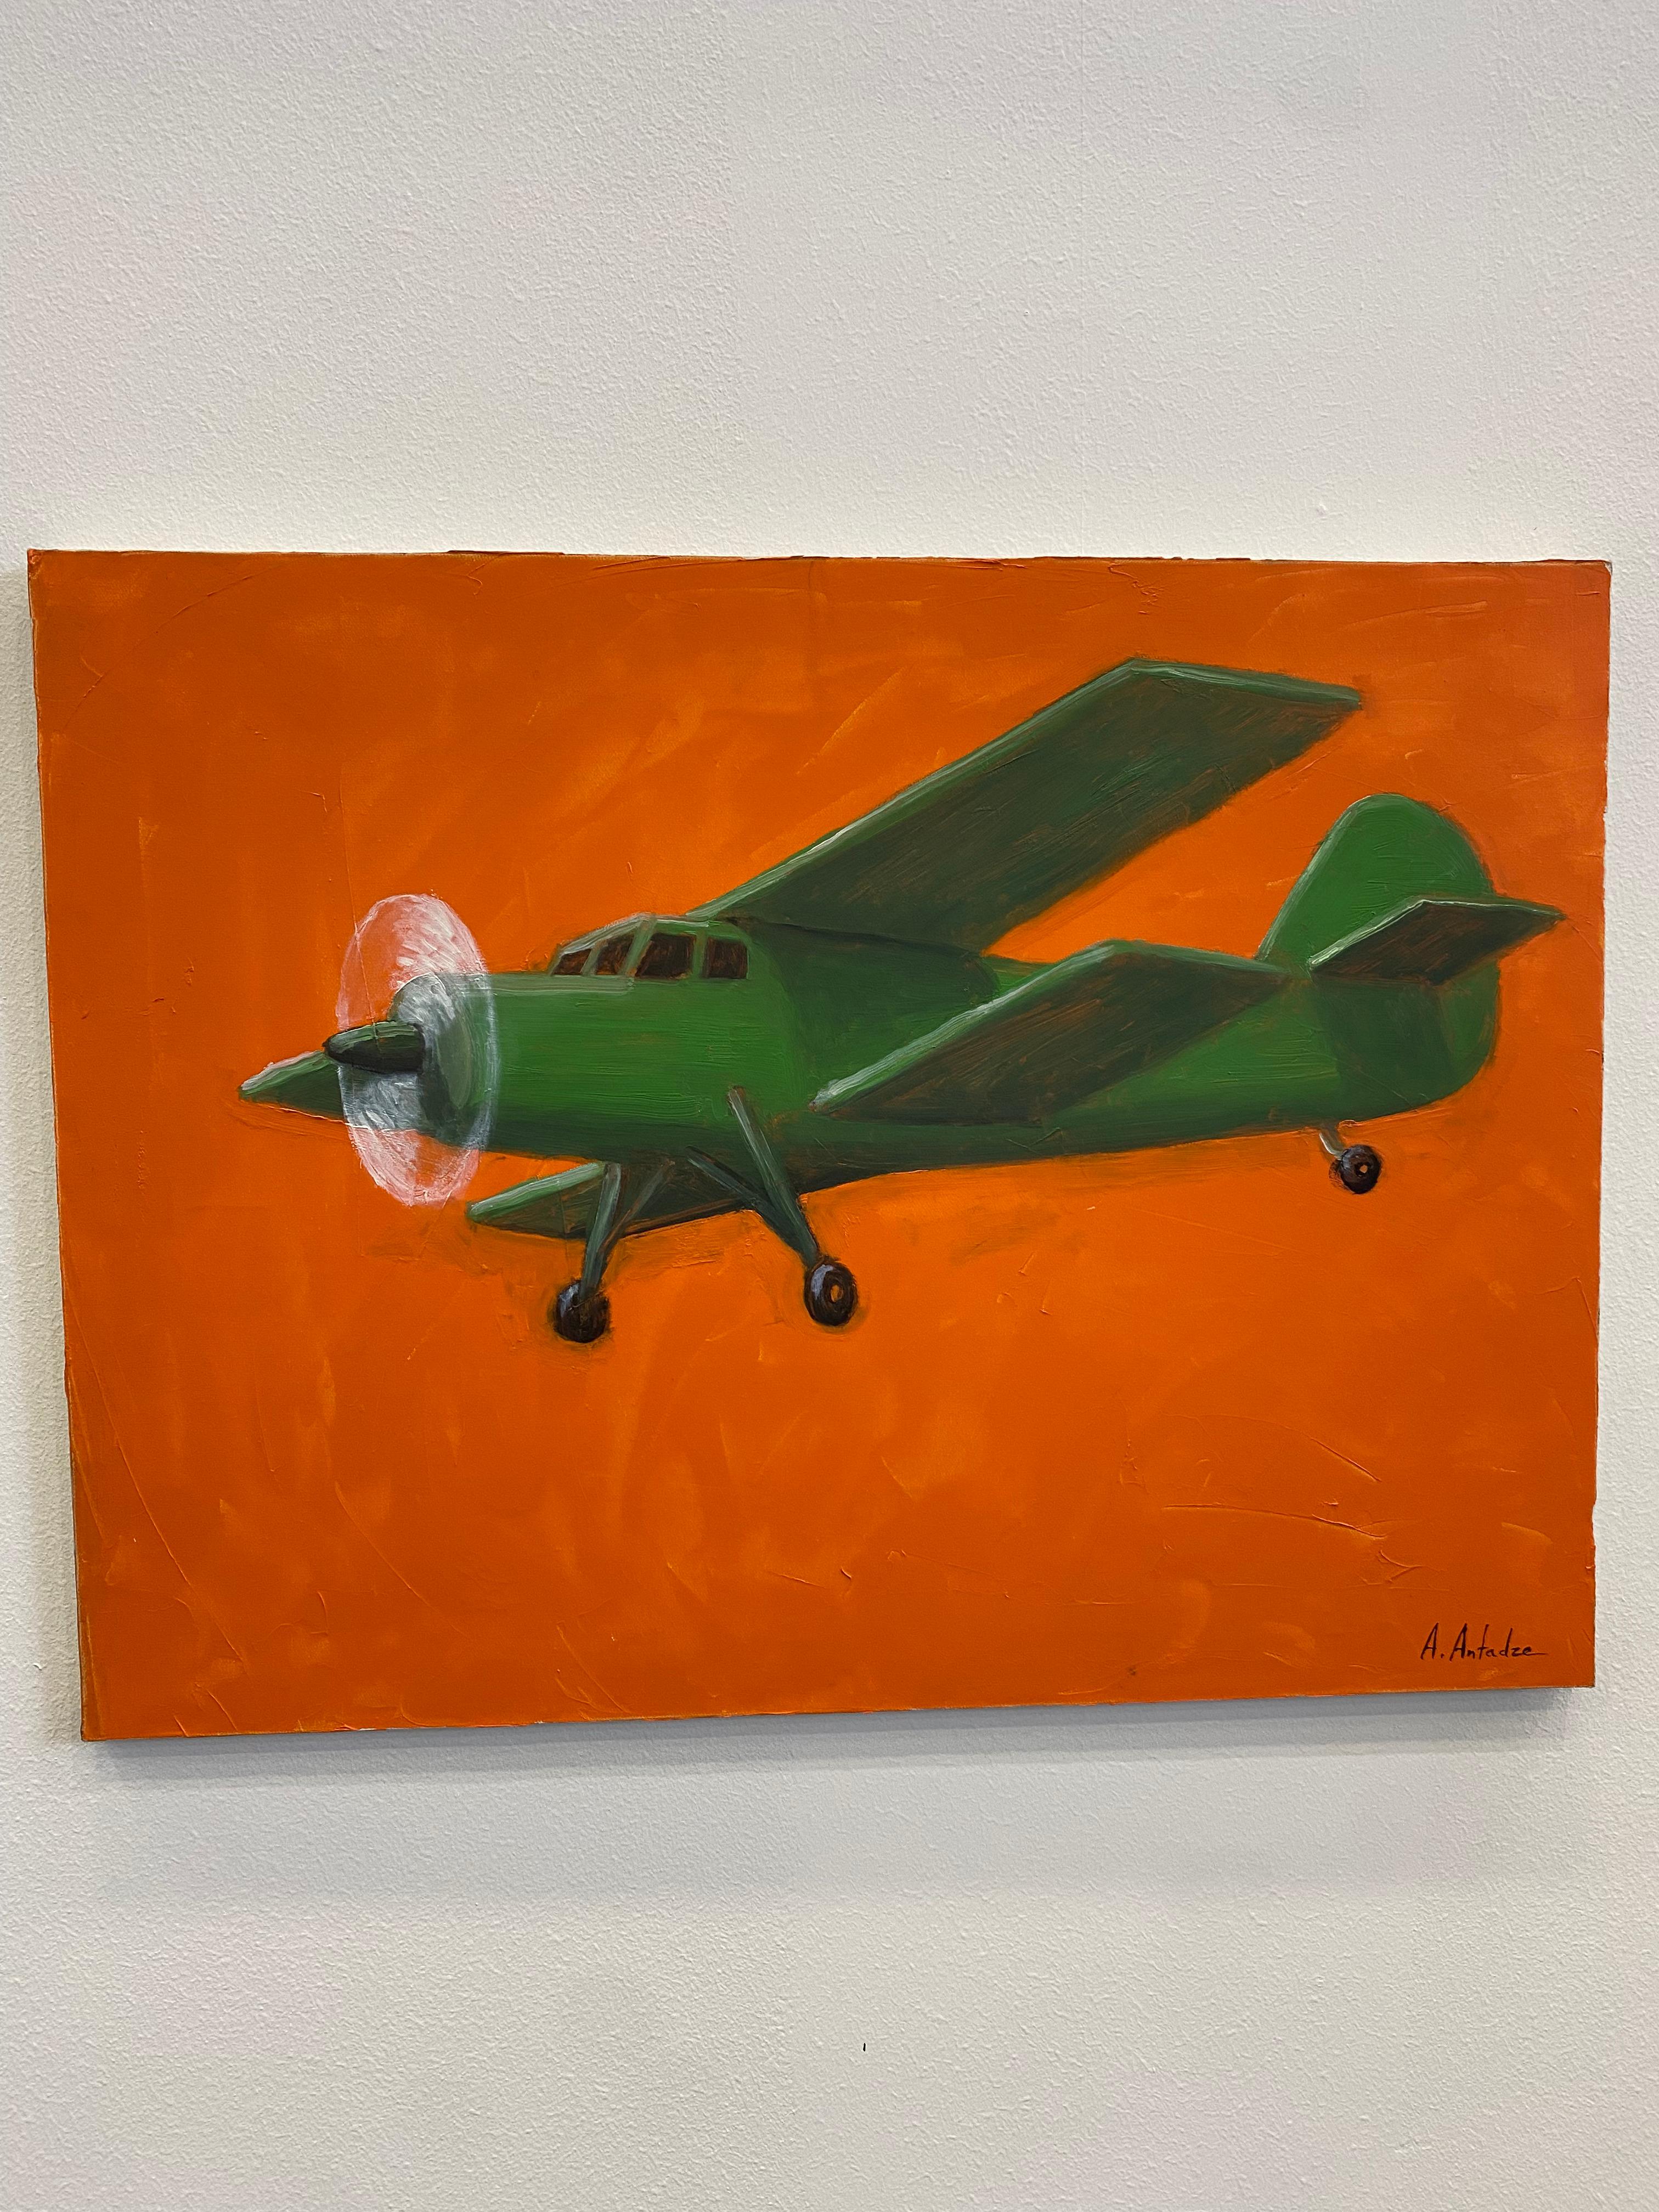 Georgian Contemporary Art by Alexander Sandro Antadze - Green Plane For Sale 5